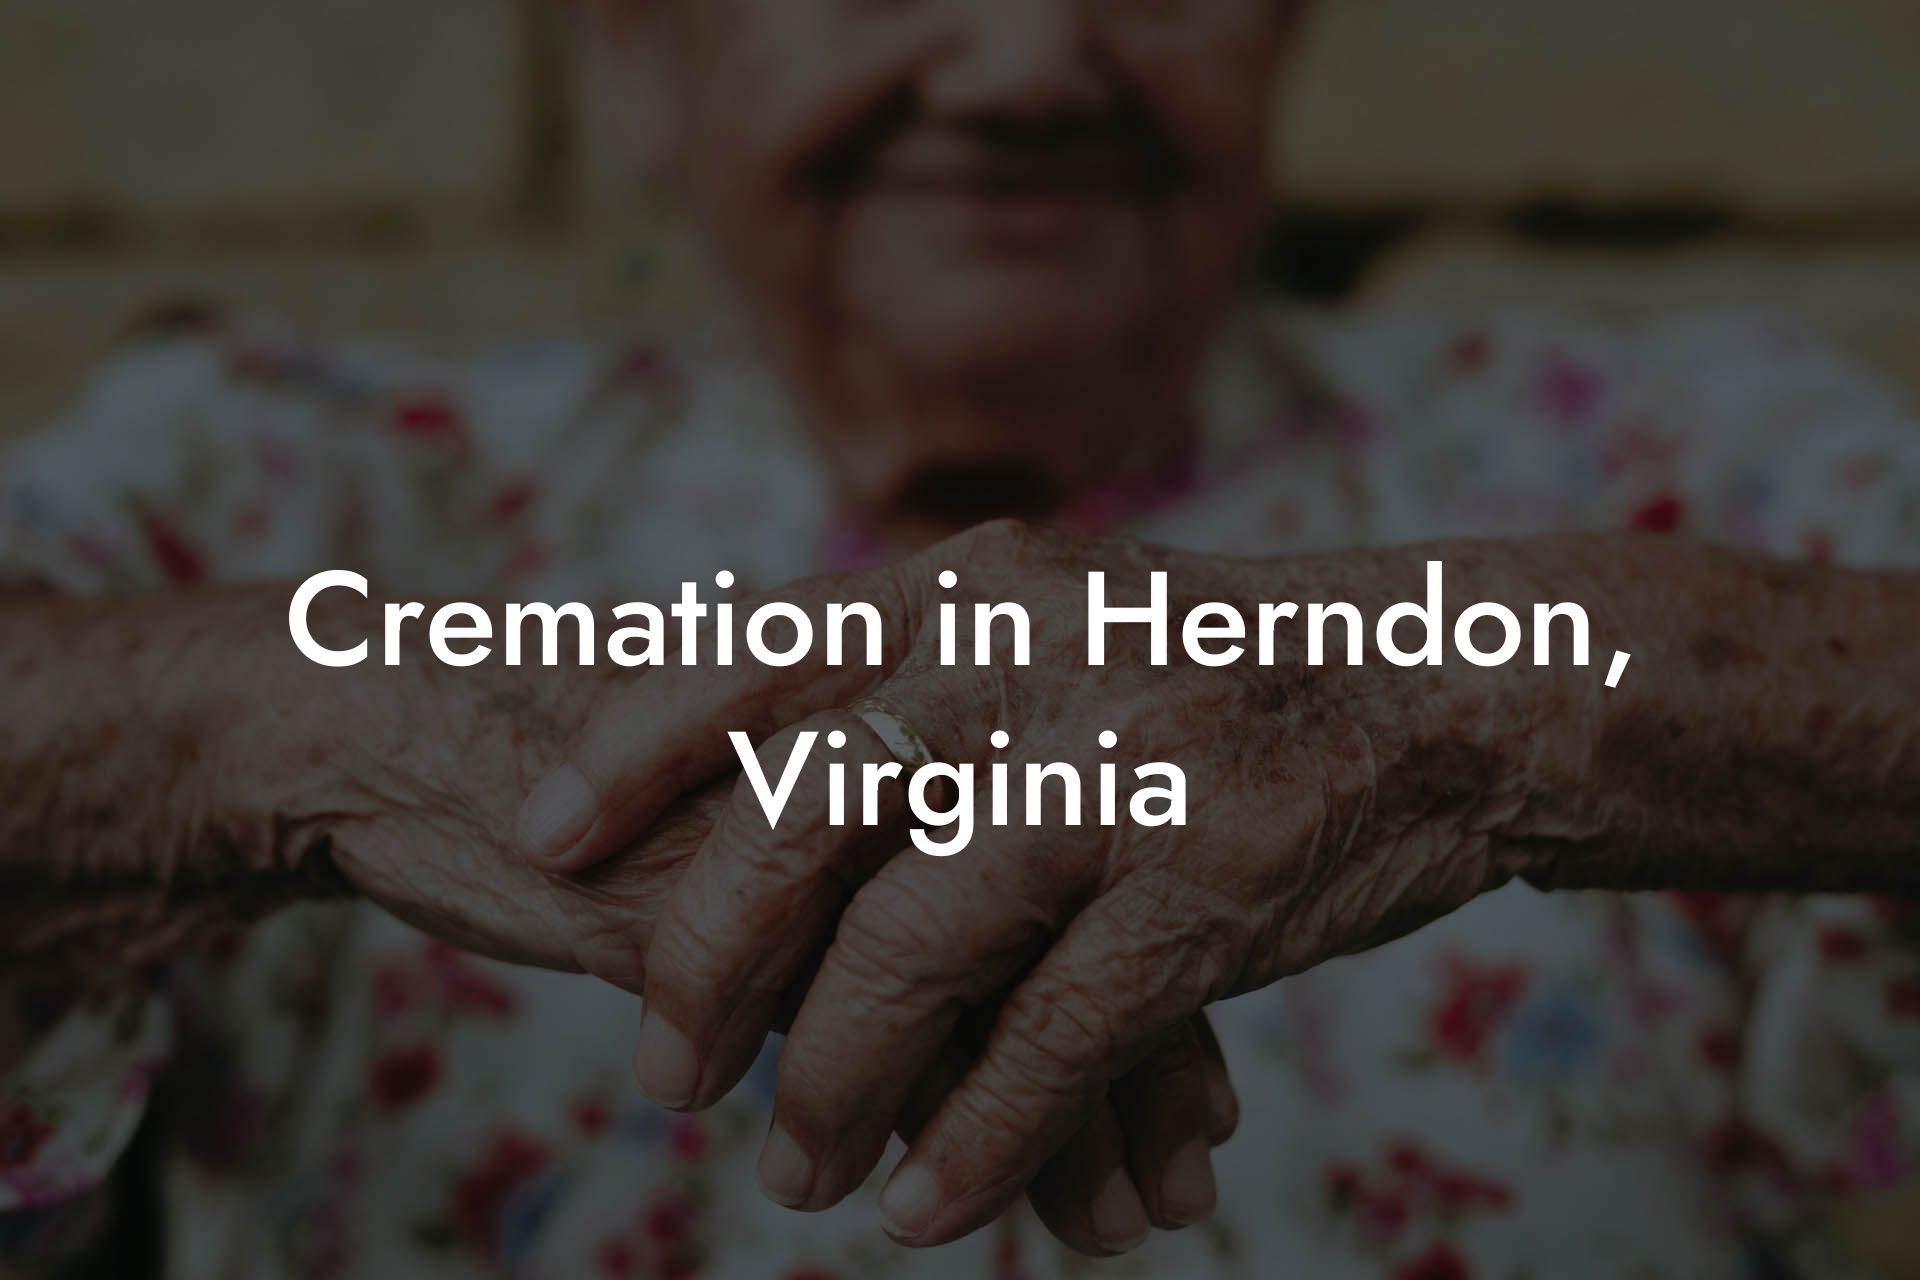 Cremation in Herndon, Virginia